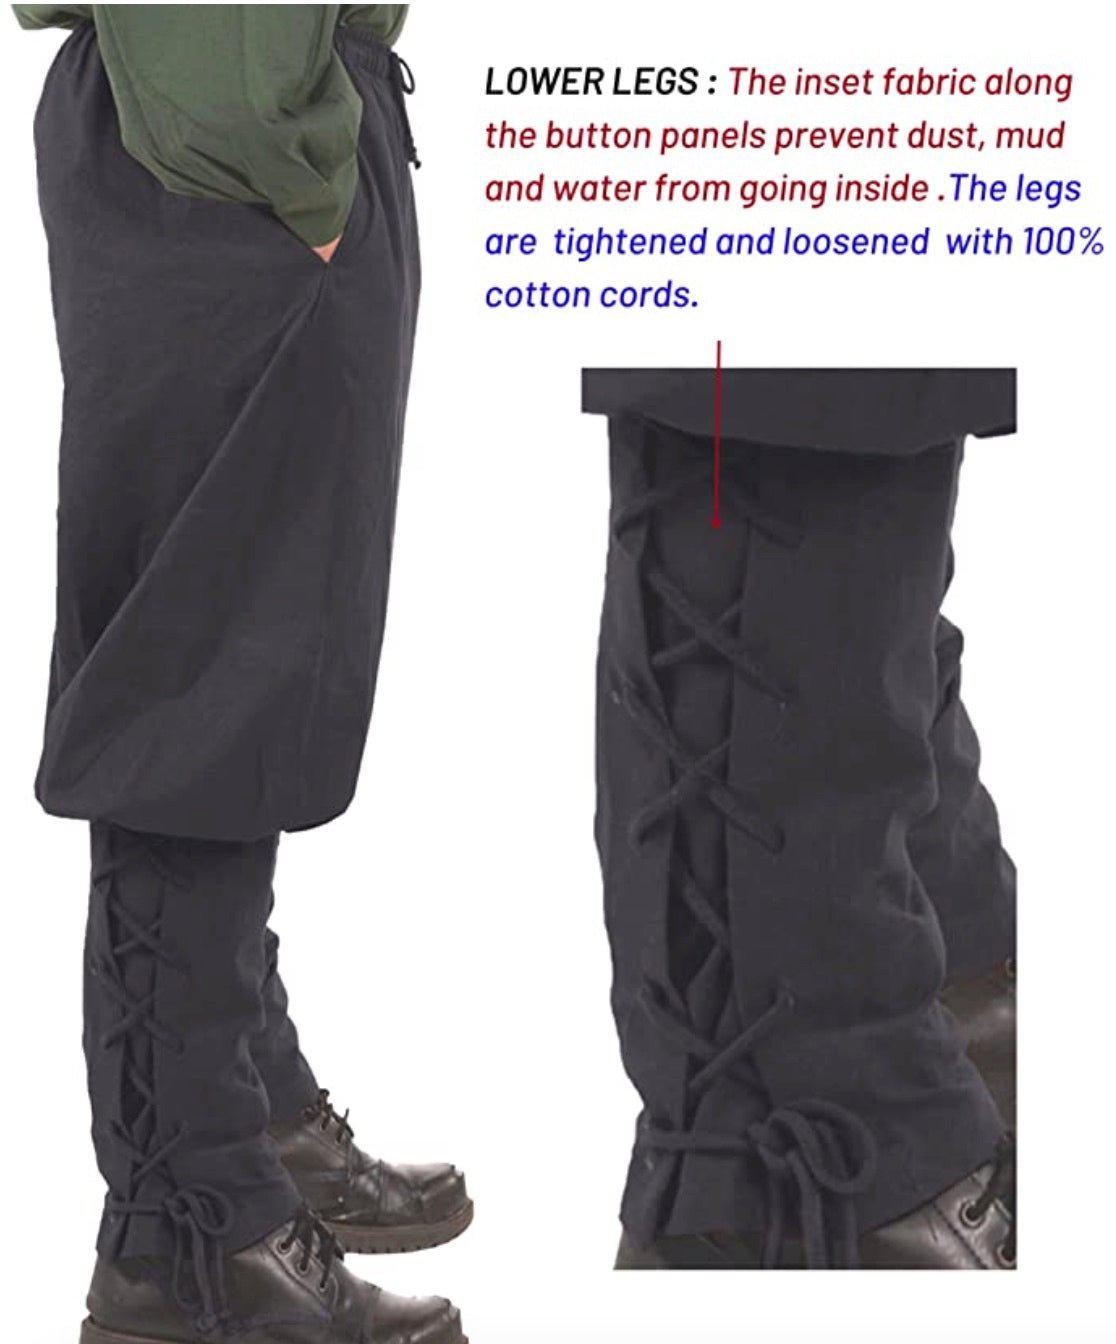 Premium Viking LARP Linen Latticework Trousers